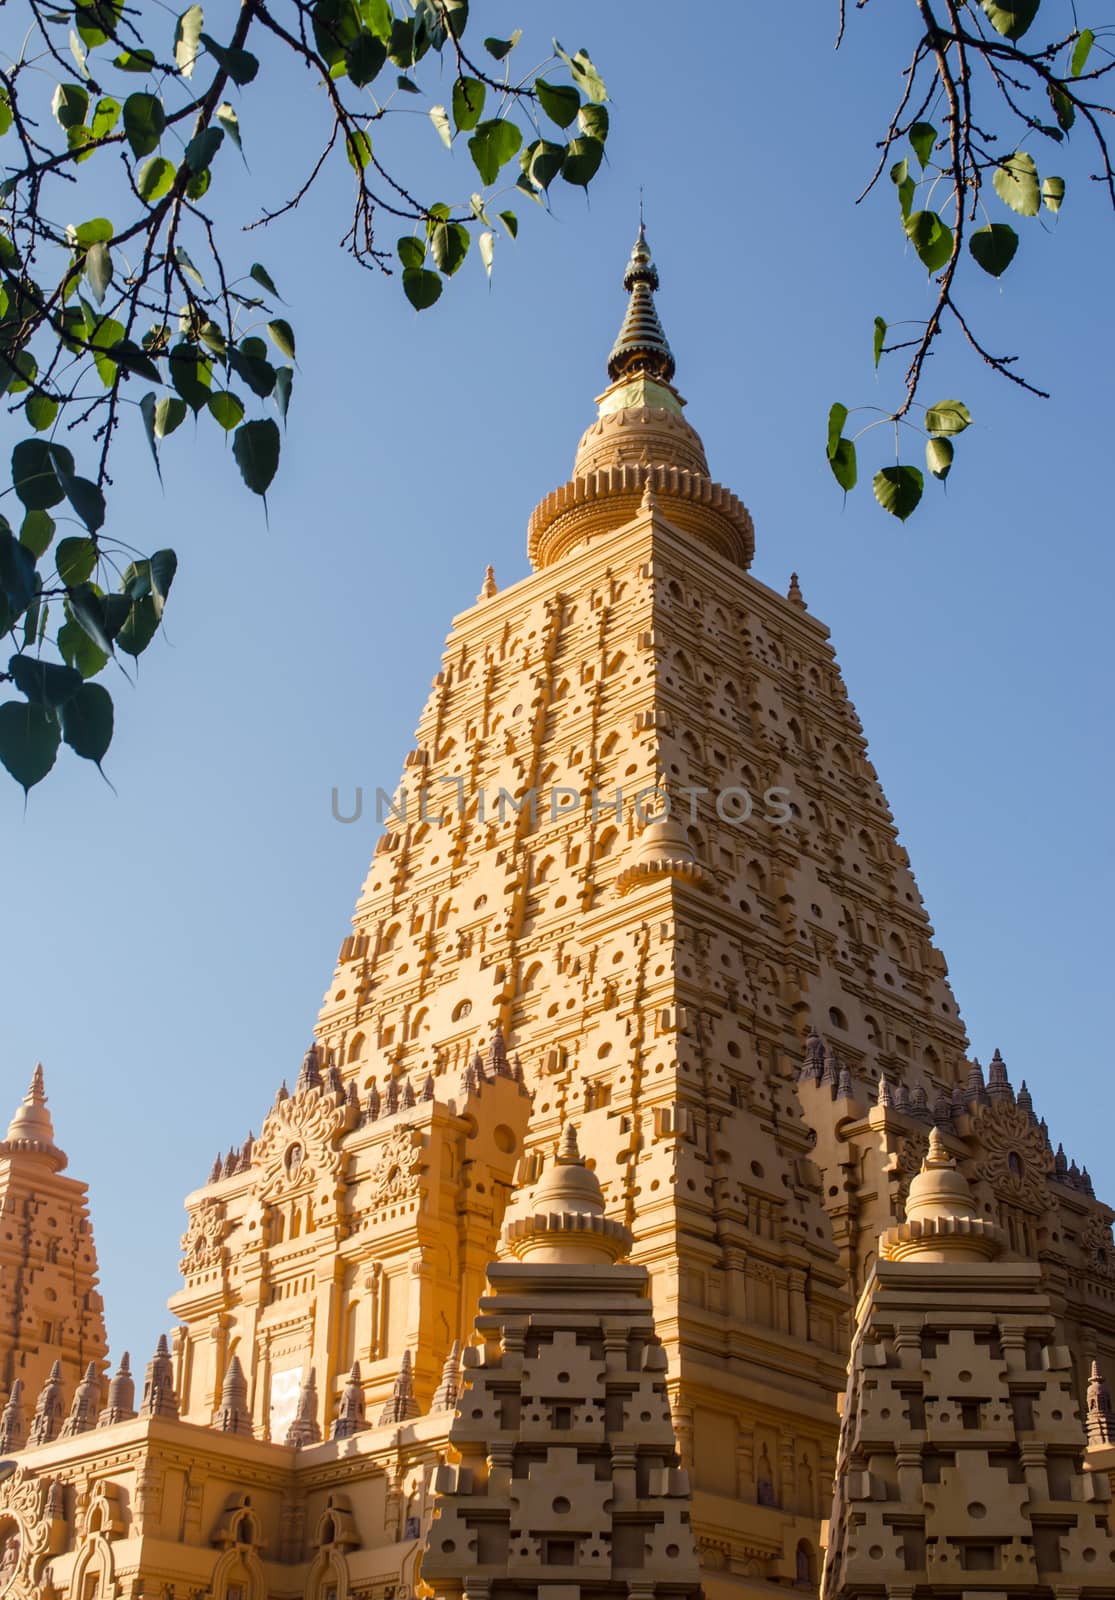 The Pagoda of Bago - Myanmar by kerdkanno